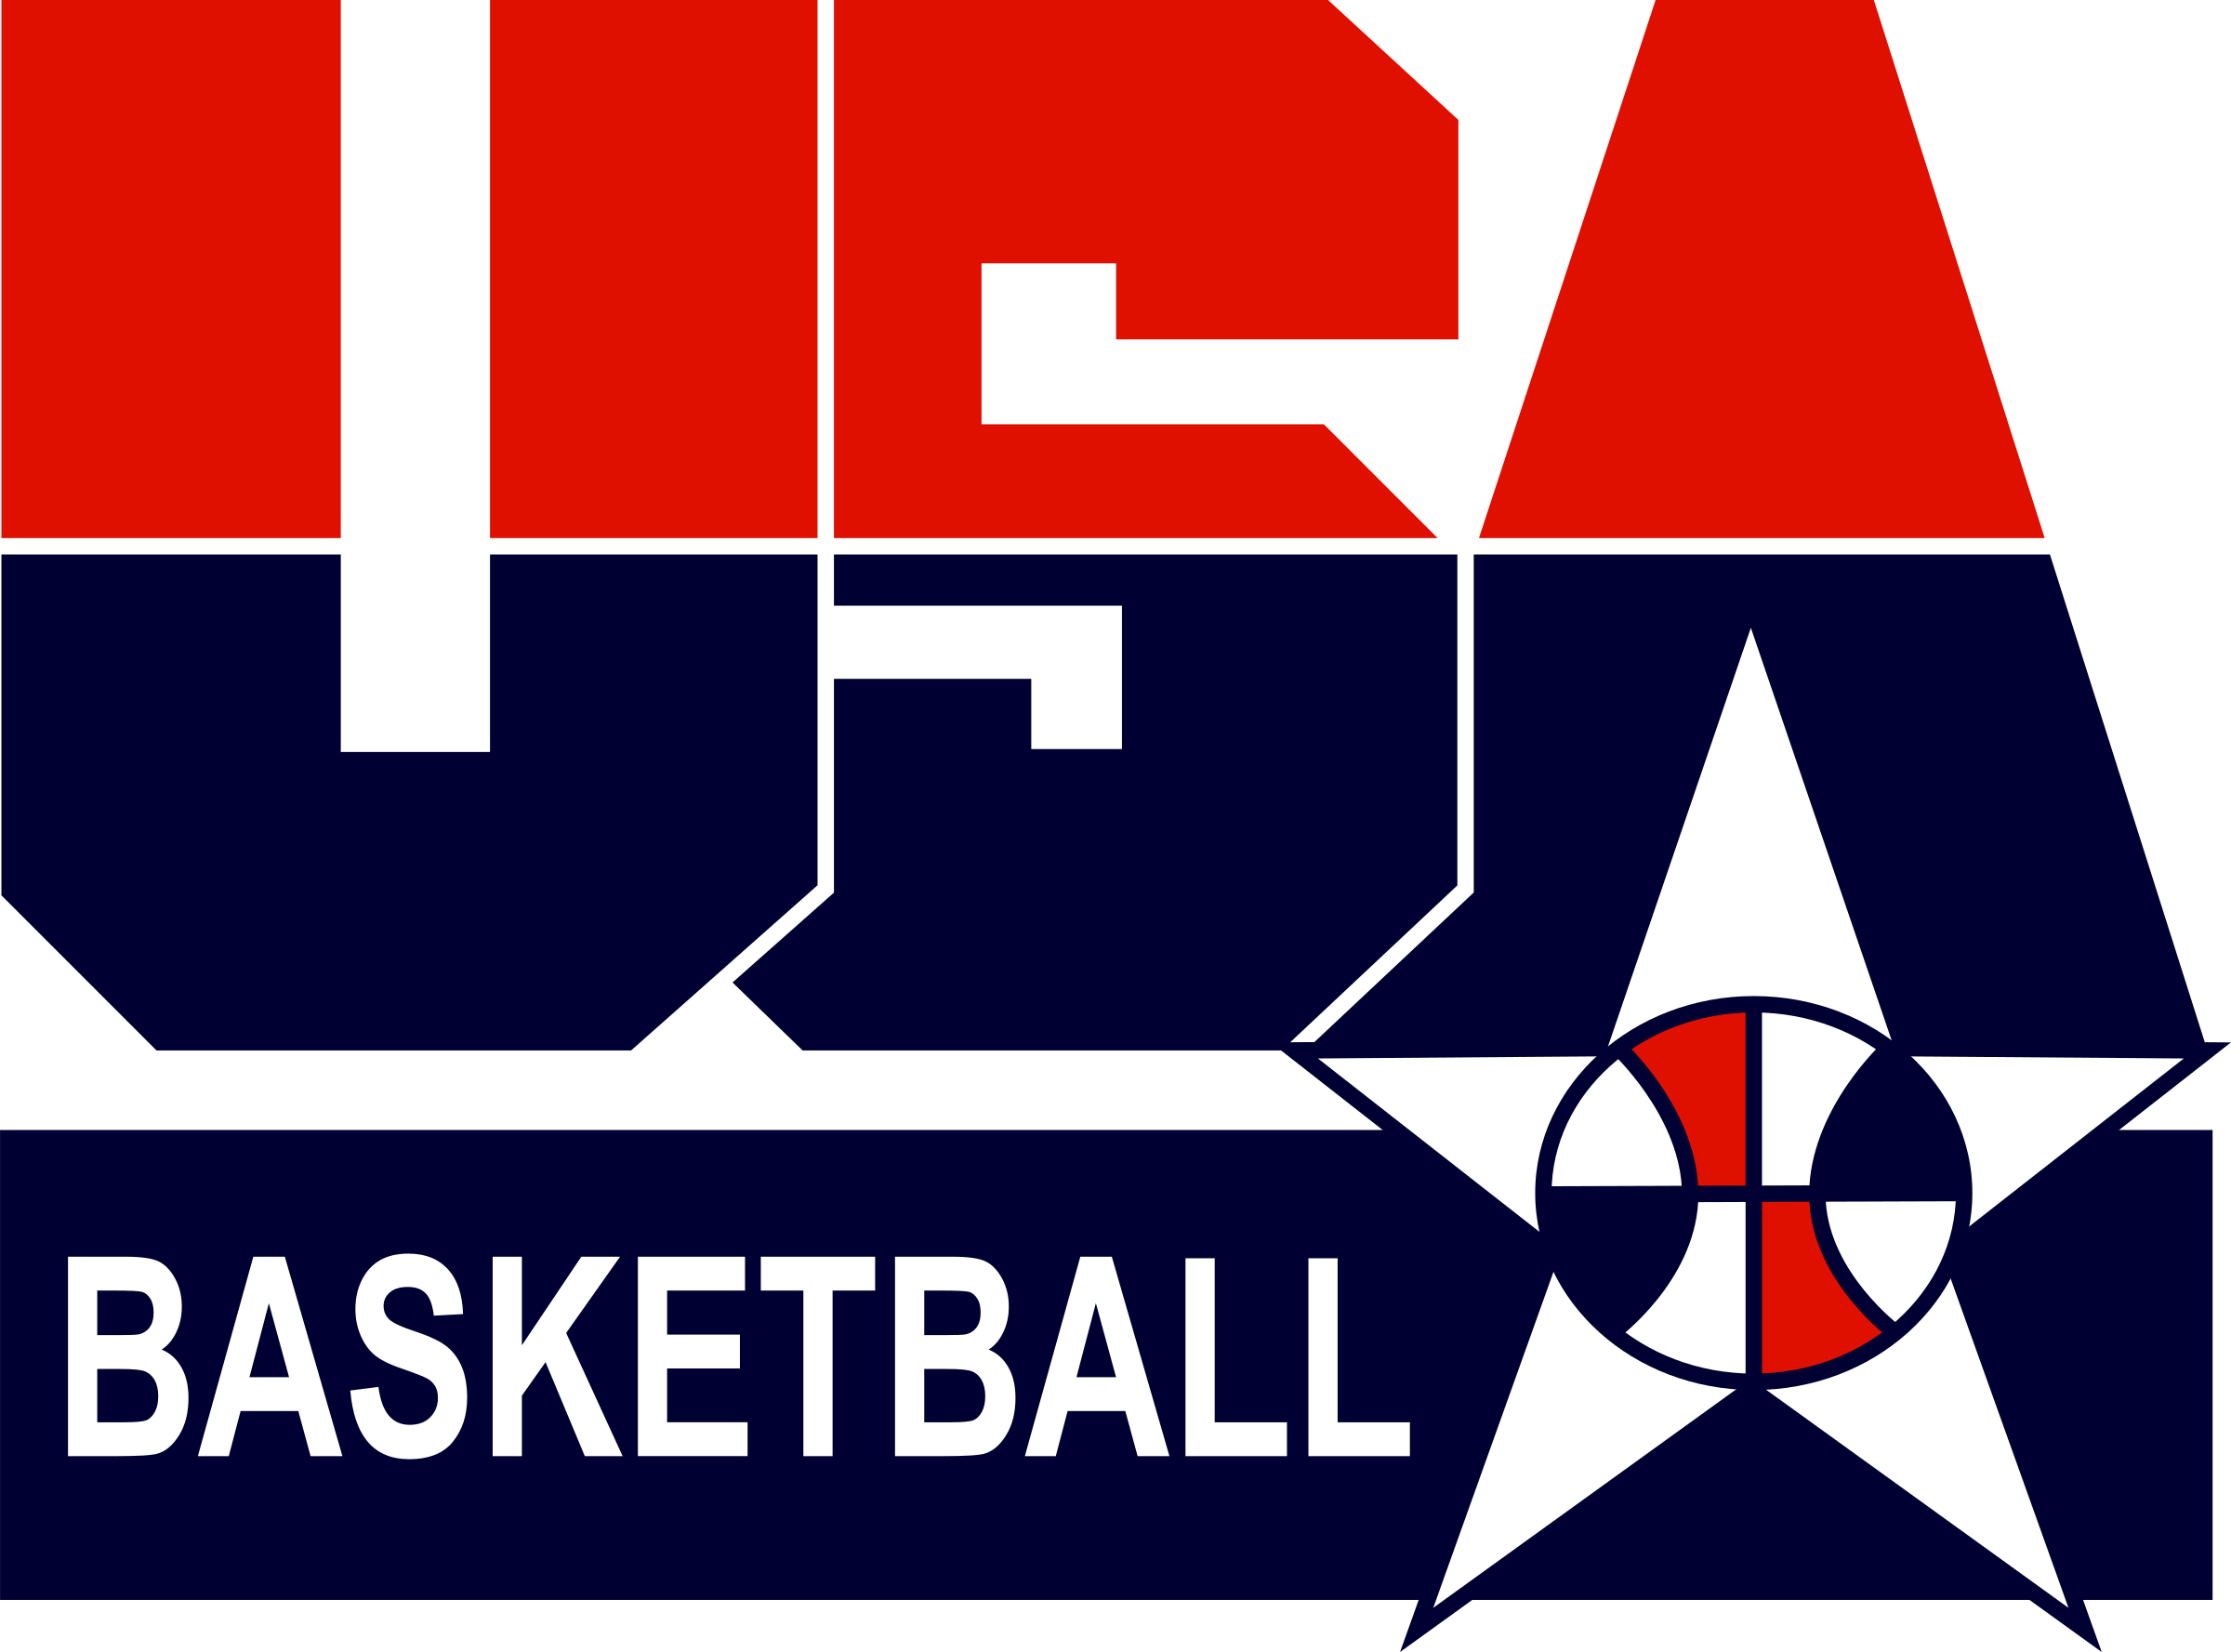 Transparent Basketball Logo - USA Basketball Logo PNG Transparent & SVG Vector - Freebie Supply